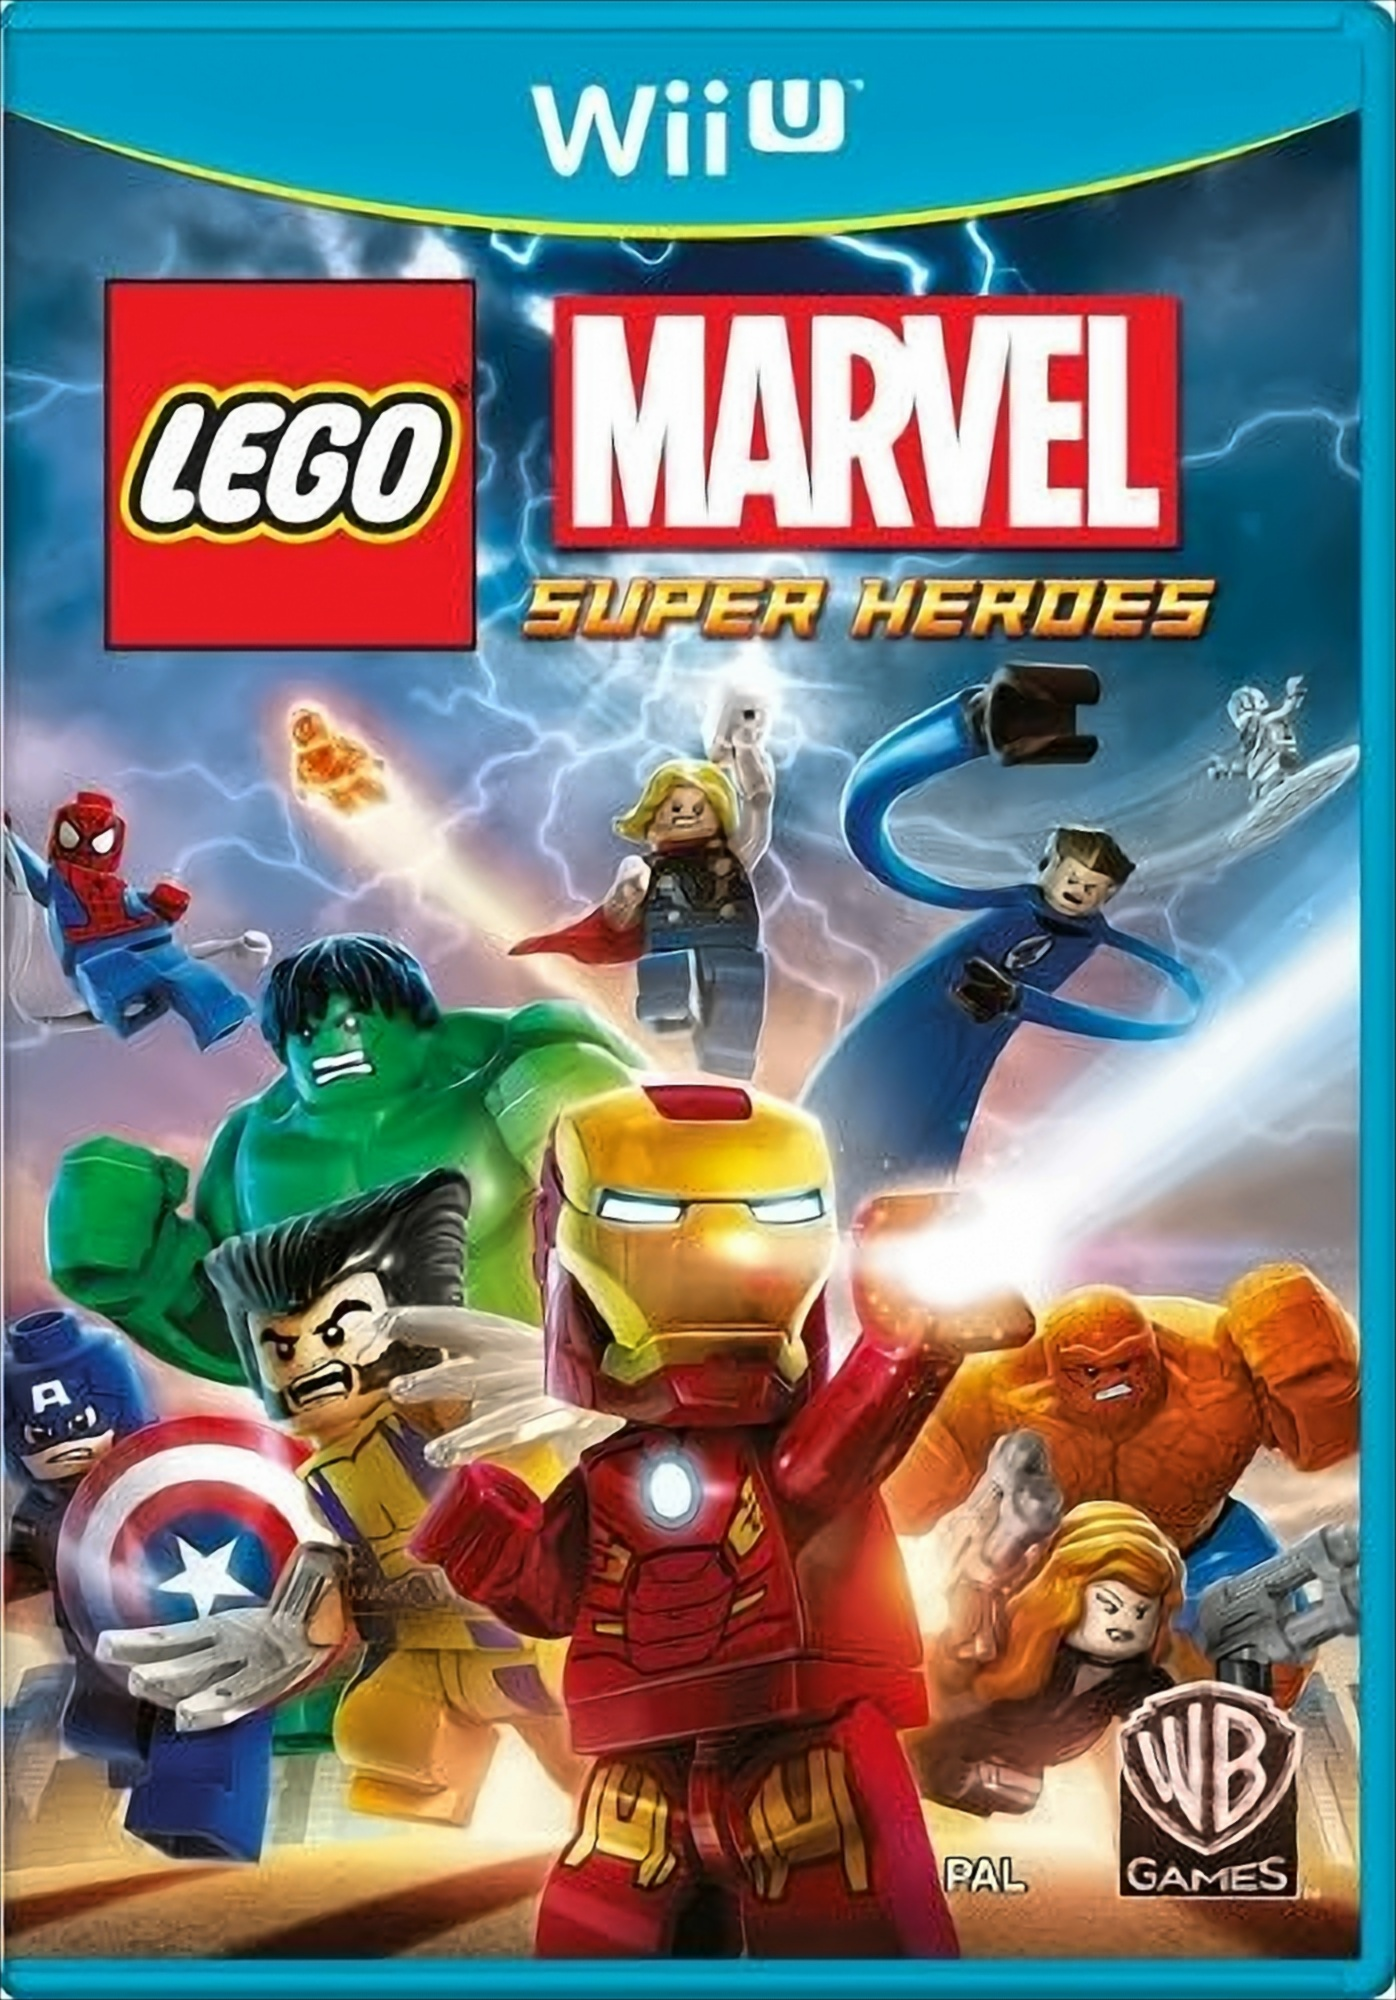 Lego Wii] Super Marvel - Heroes [Nintendo